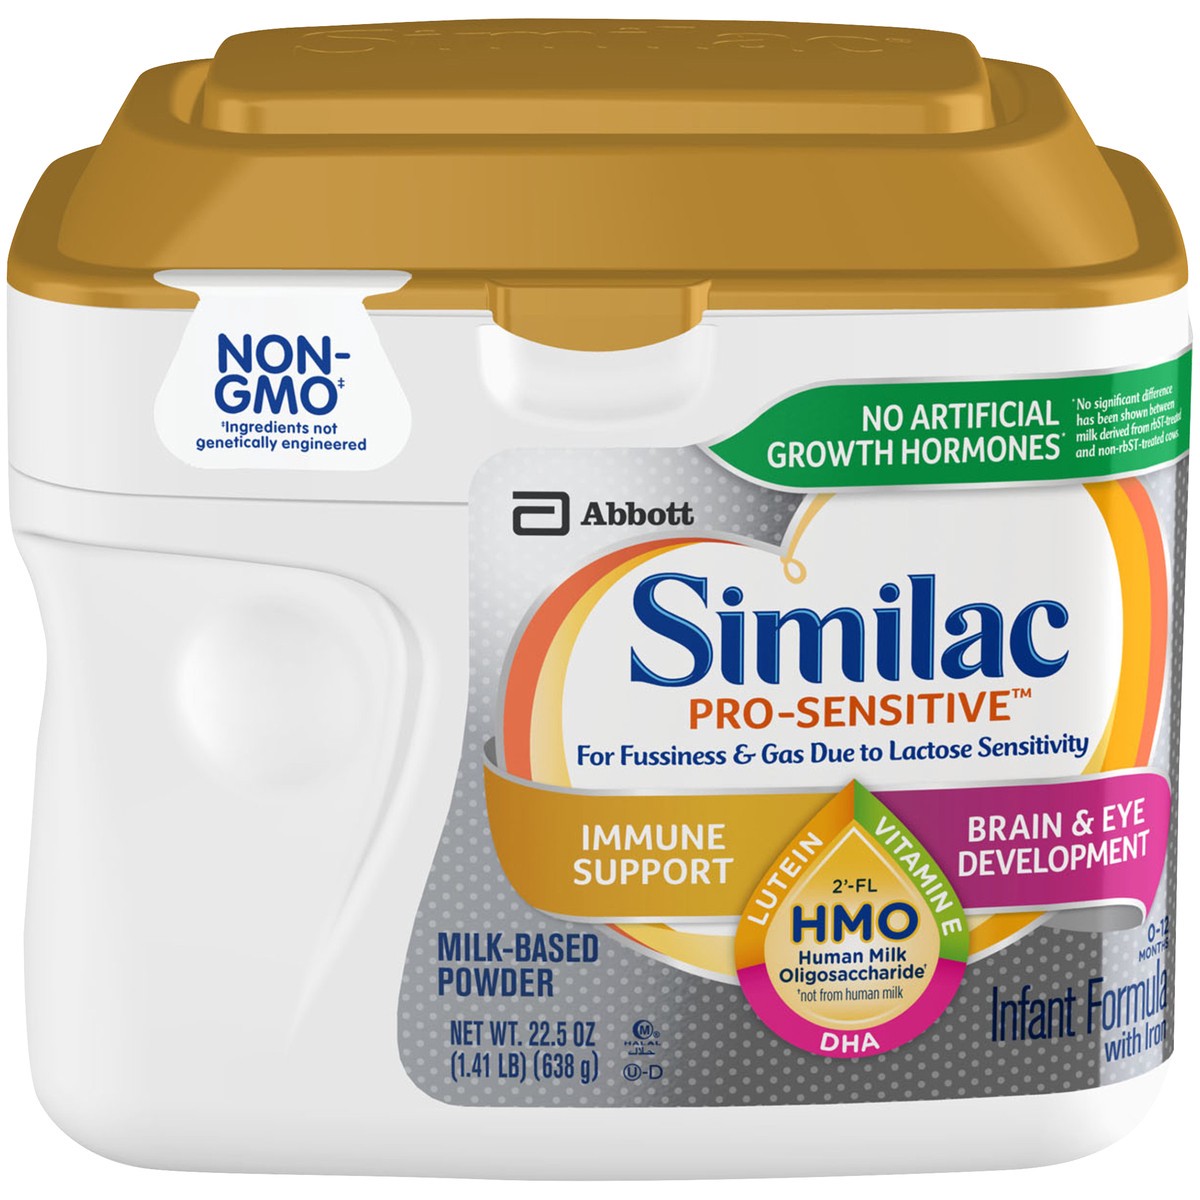 slide 1 of 14, Similac Pro-Sensitive Infant Formula with 2''-FL Human Milk Oligosaccharide* (HMO) for Immune Support, 22.5 ounces, 22.5 oz